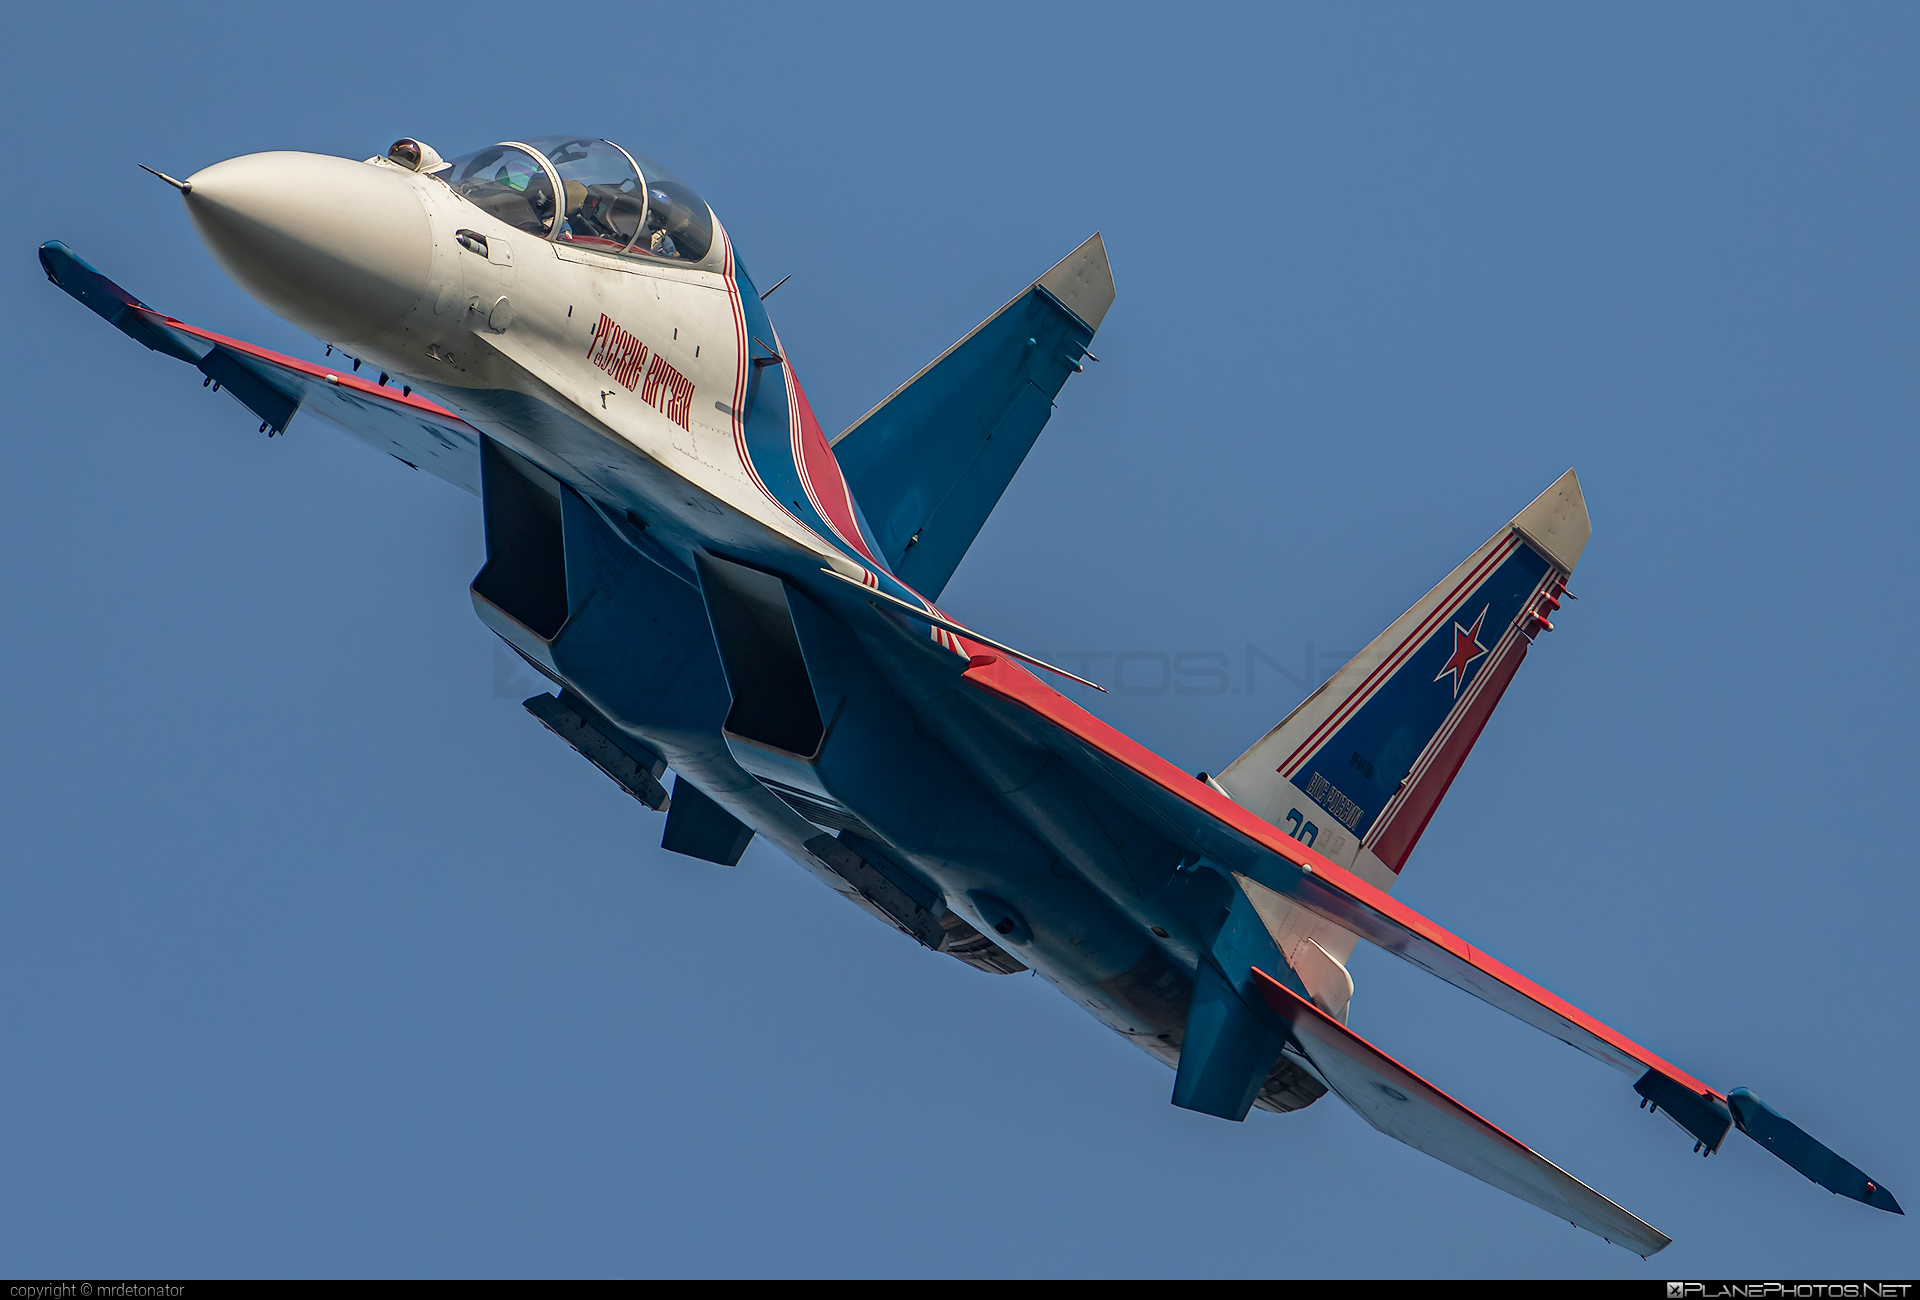 Sukhoi Su-30SM - RF-81701 operated by Voyenno-vozdushnye sily Rossii (Russian Air Force) #maks2019 #russianknights #russkiyevityazi #su30 #su30sm #sukhoi #sukhoi30 #sukhoisu30sm